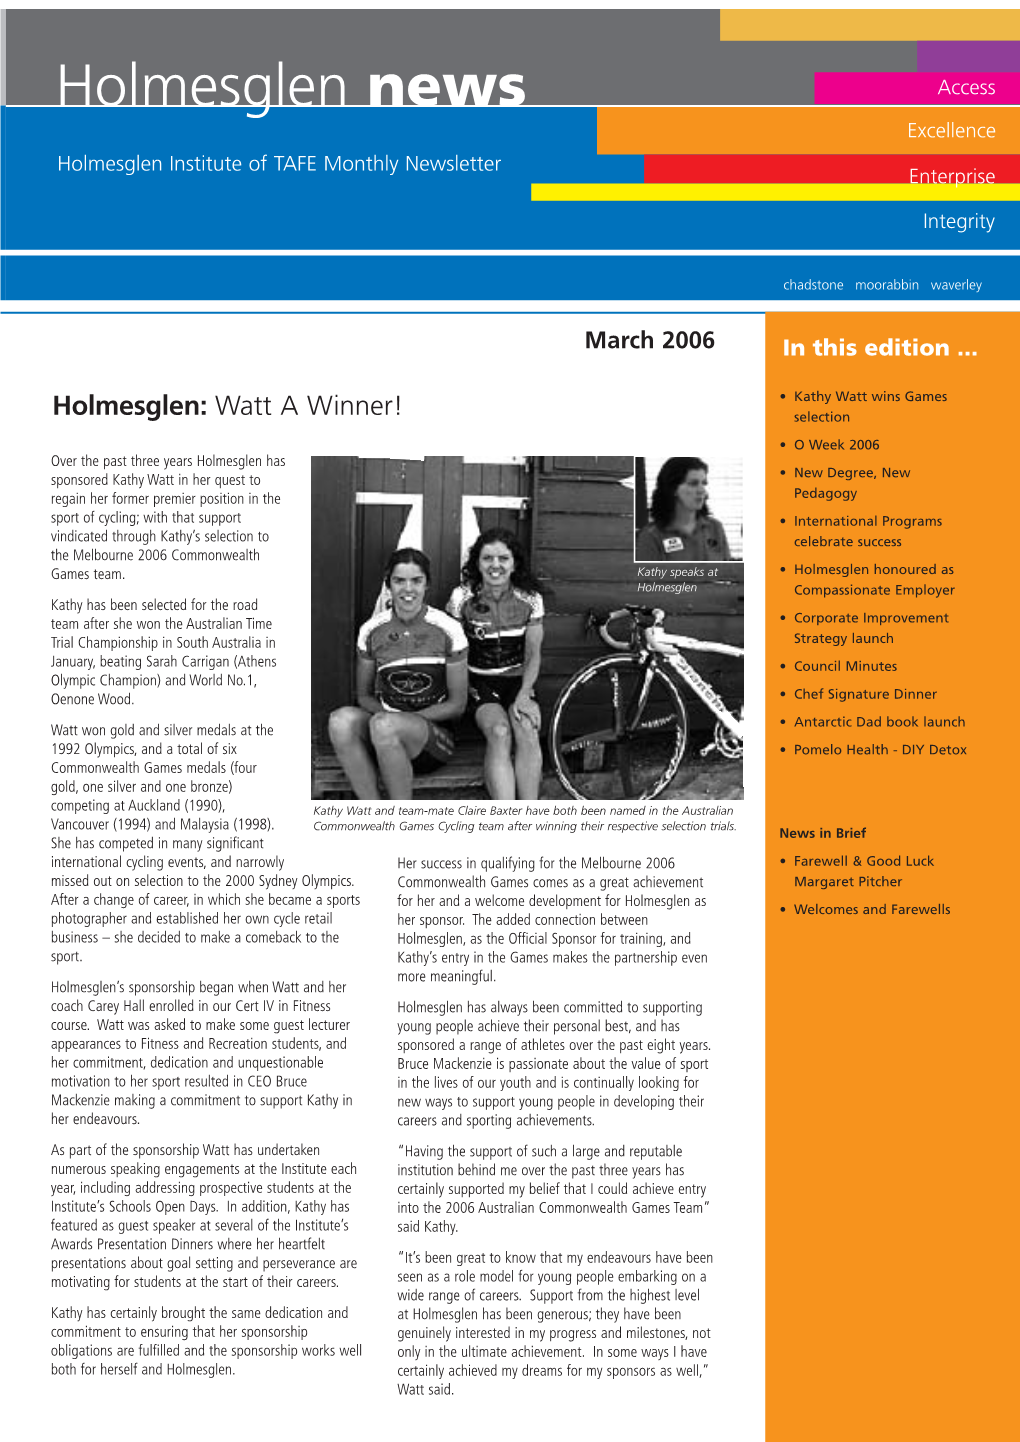 Holmesglen News Access Excellence Holmesglen Institute of TAFE Monthly Newsletter Enterprise